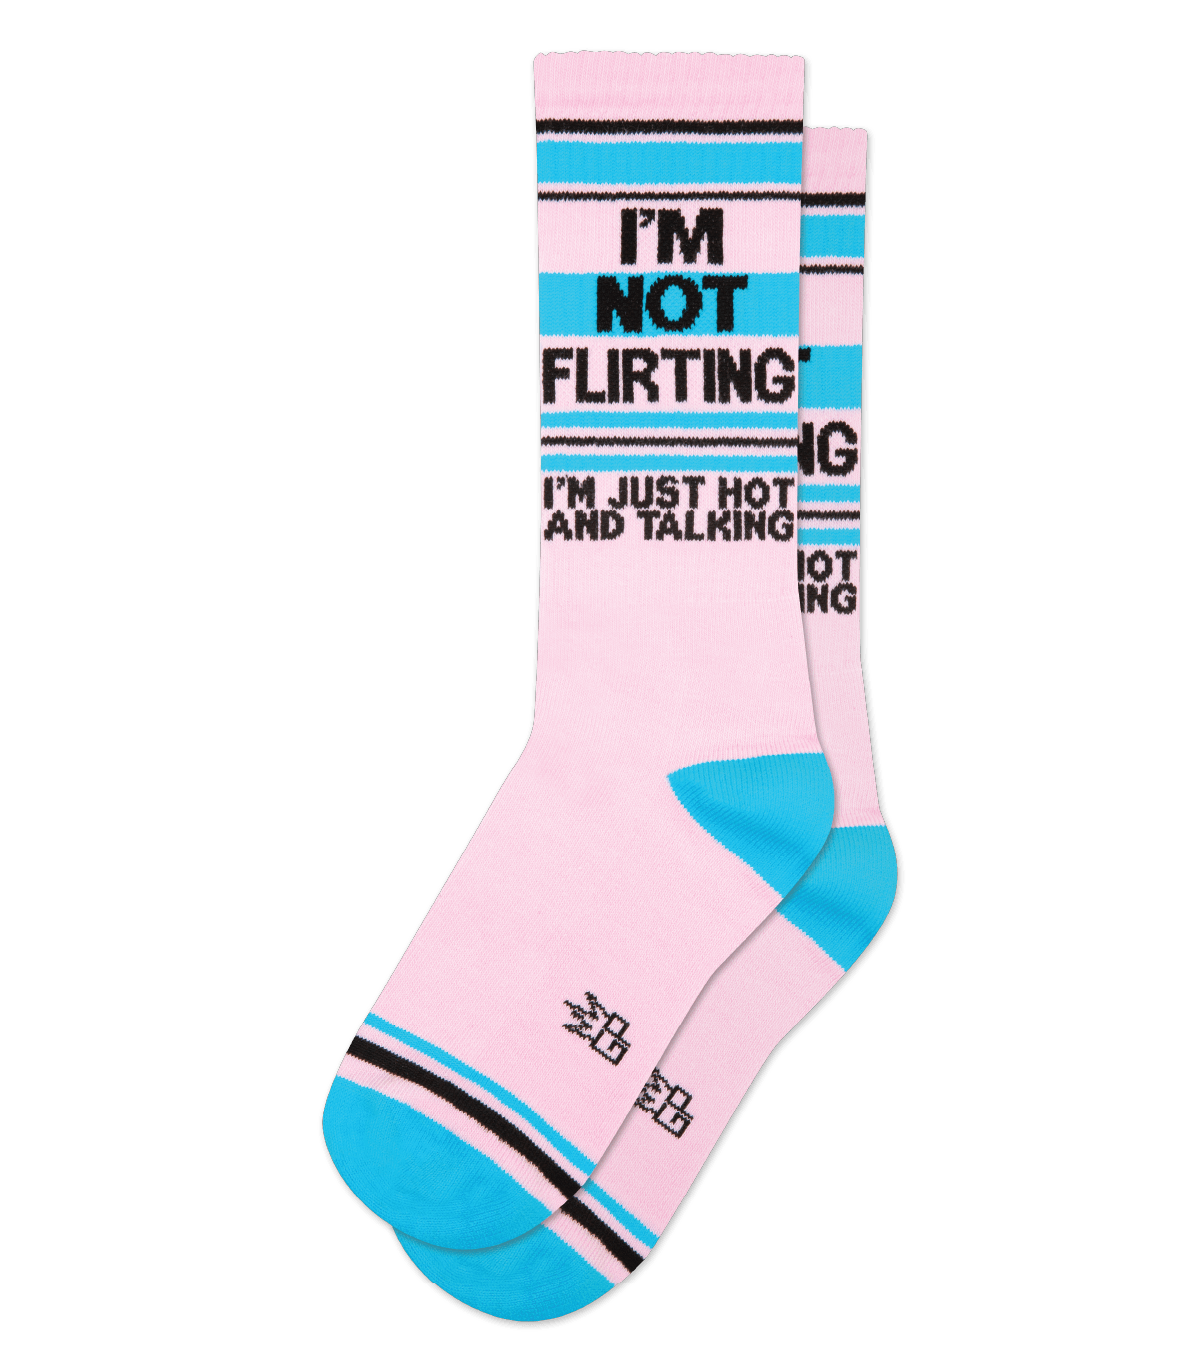 I'M NOT FLIRTING (I'M JUST HOT AND TALKING) gym socks